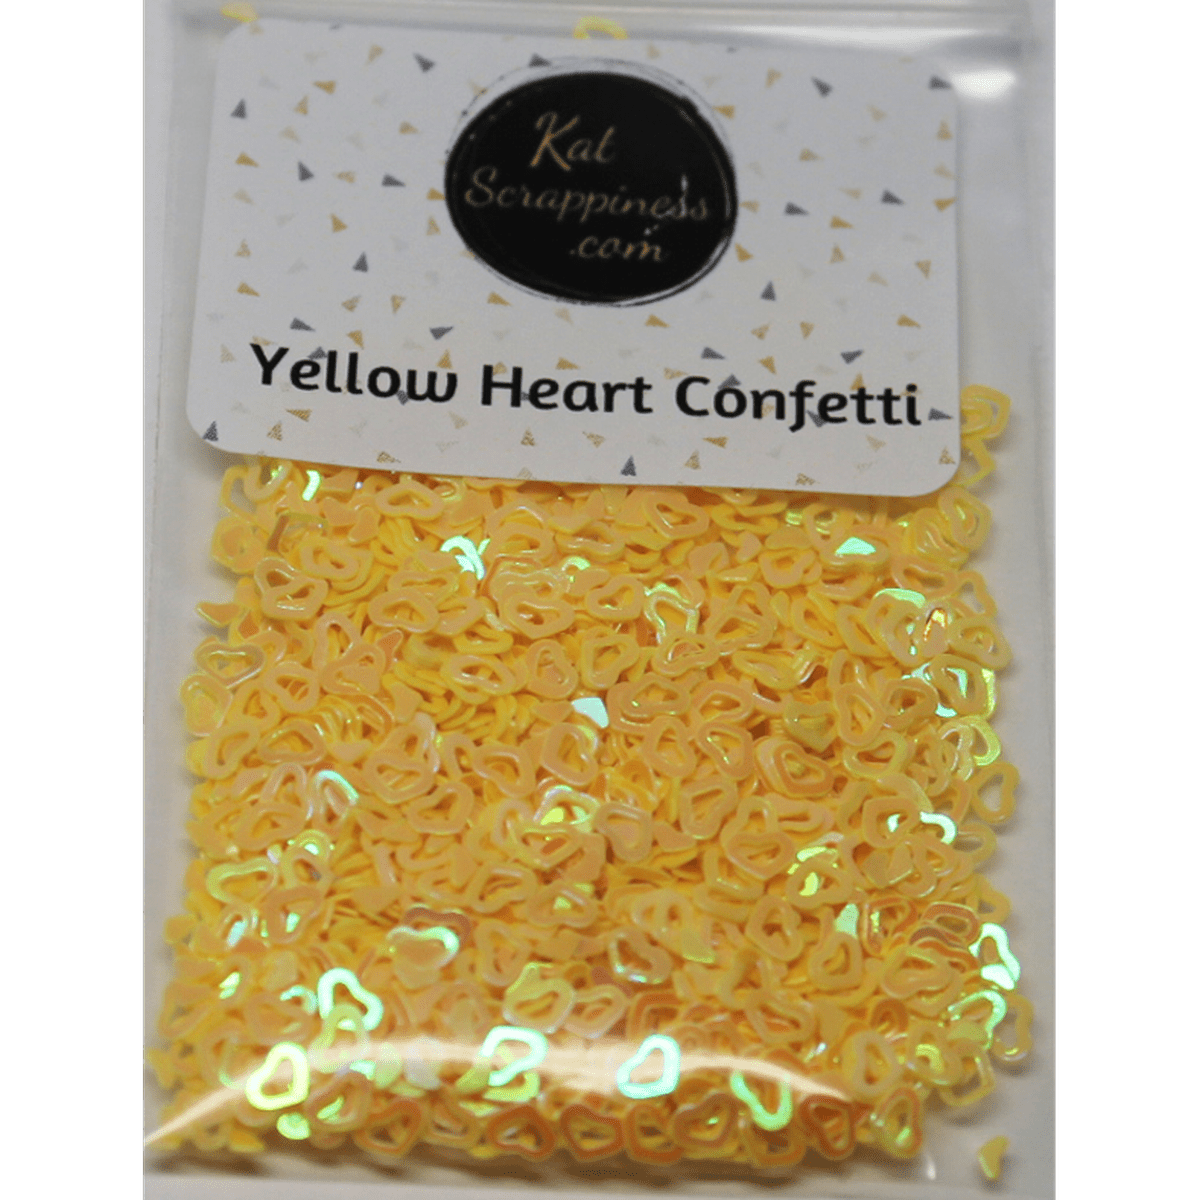 Yellow (Hollow) Heart Confetti Mix - Kat Scrappiness